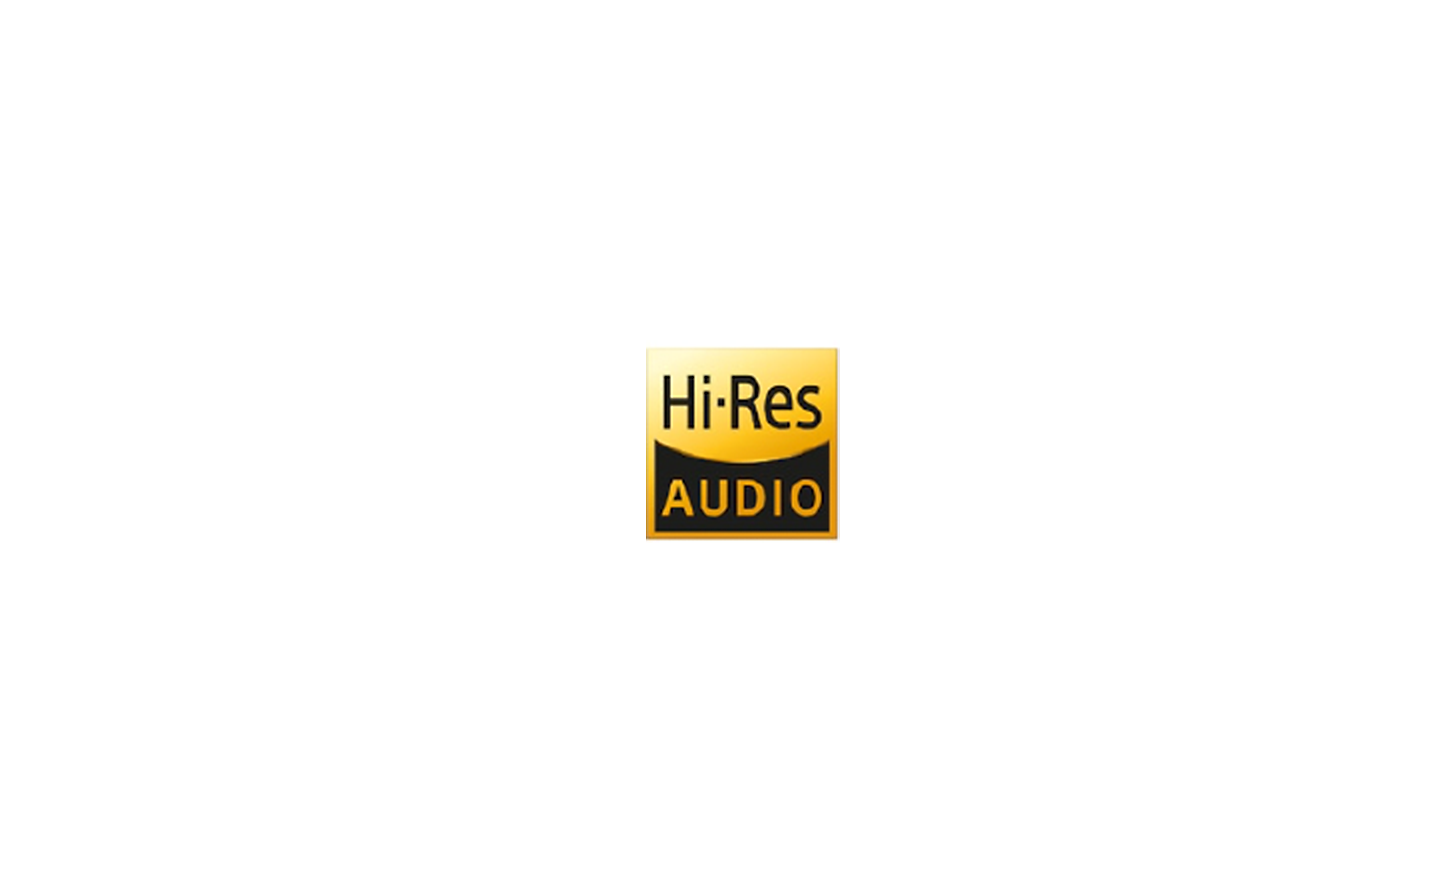 Slika crno-žutog logotipa Hi-Res AUDIO